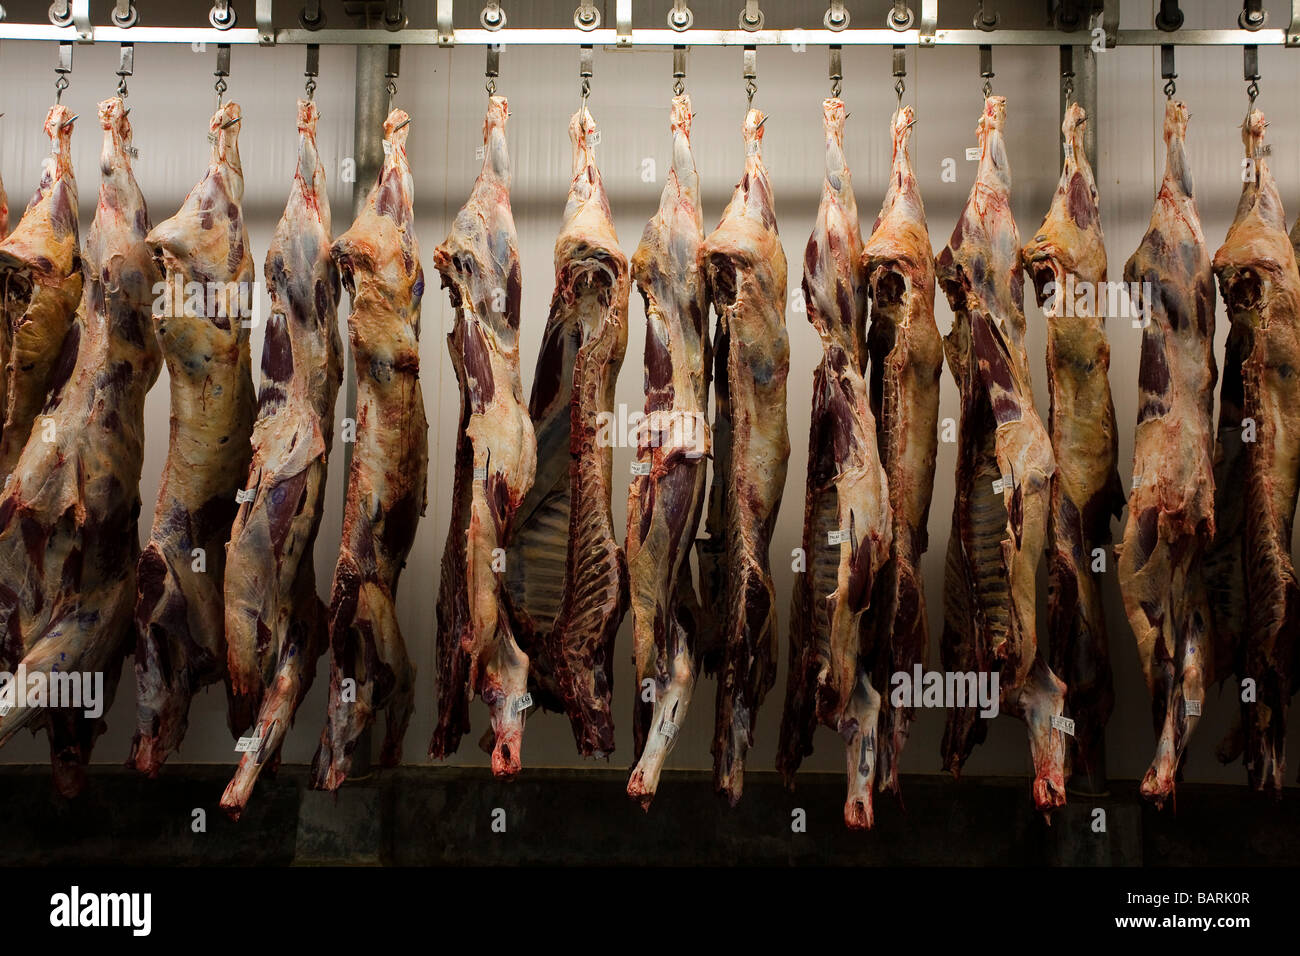 Schlachthof Anlage Fleisch exportieren Mato Grosso Staat Amazonas Brasilien Stockfoto